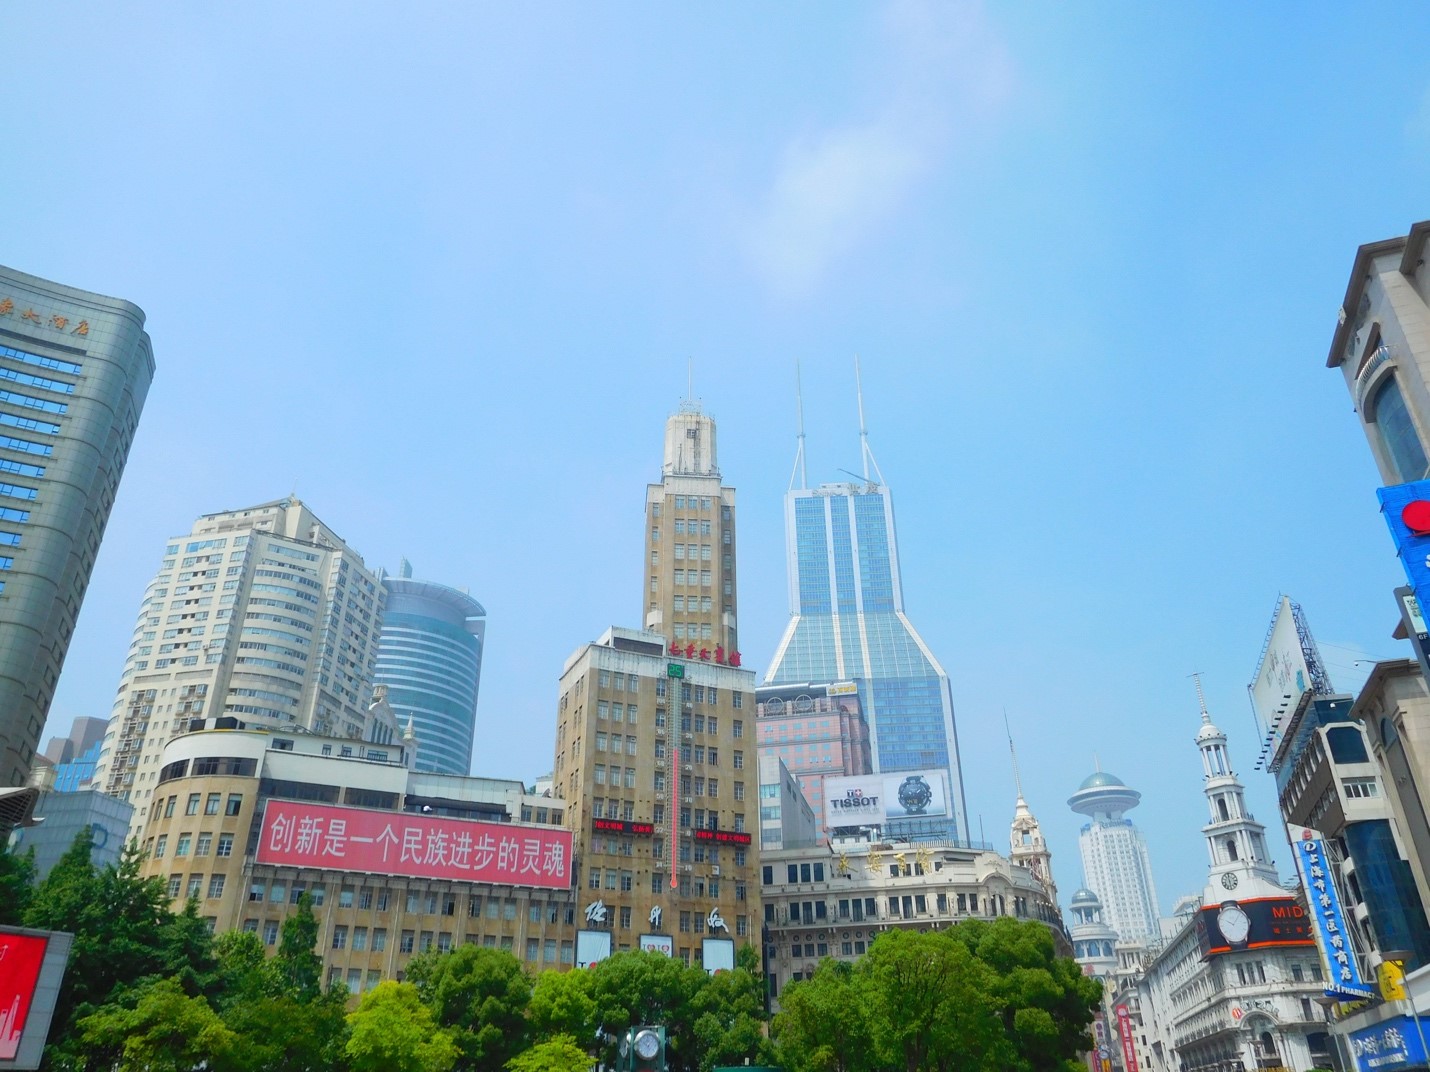 Downtown Shanghai, May 2016